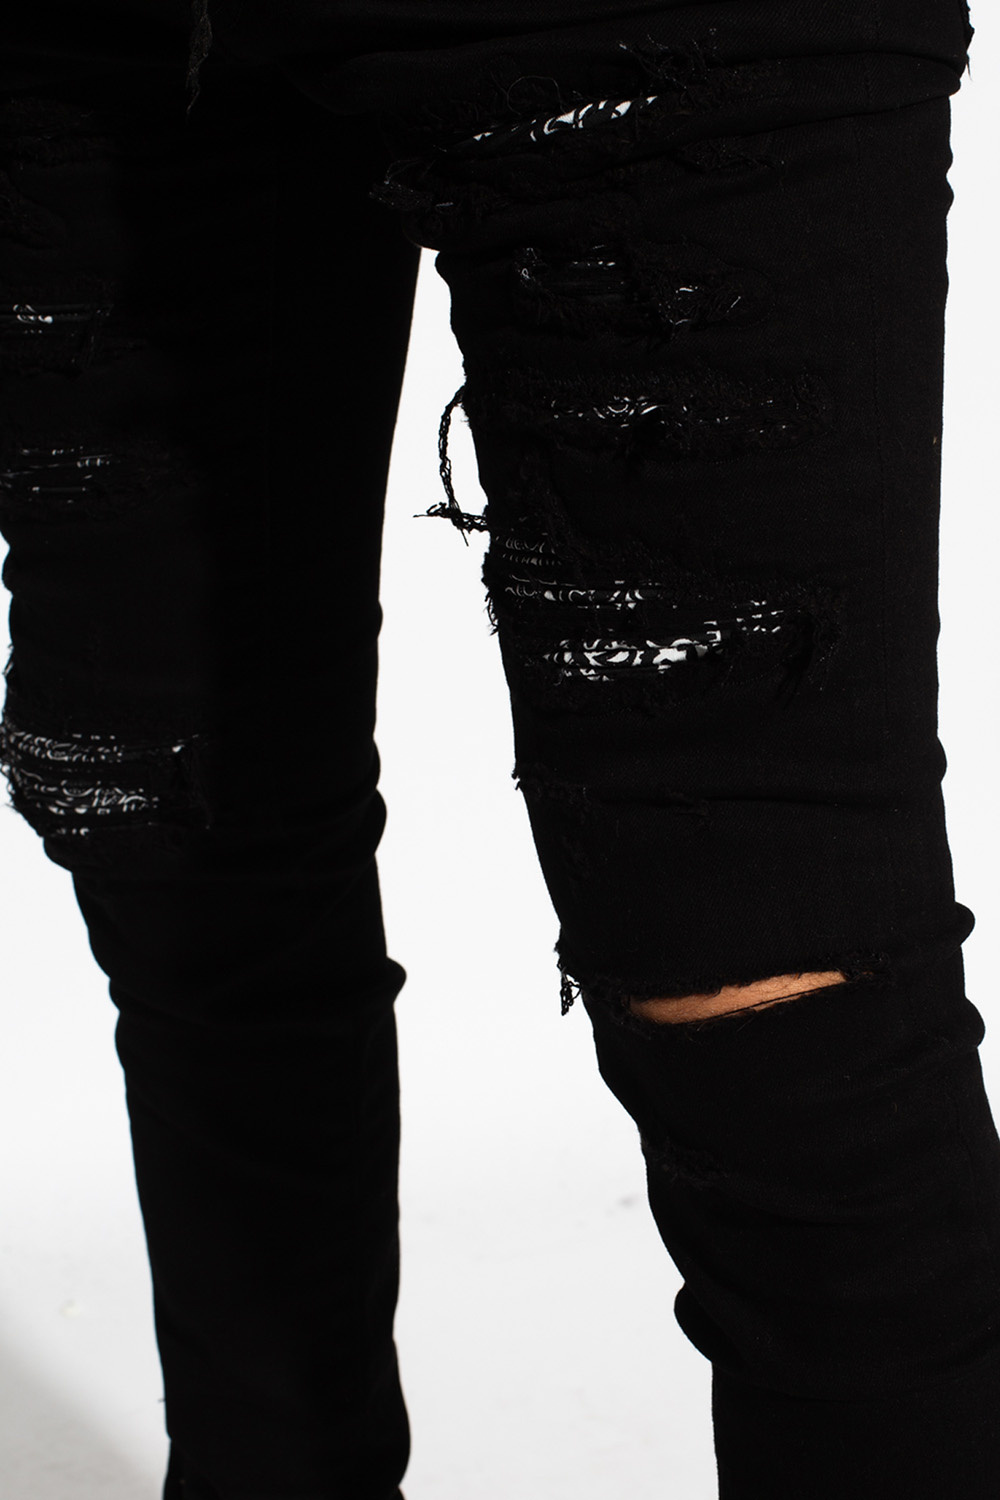 Amiri Distressed jeans